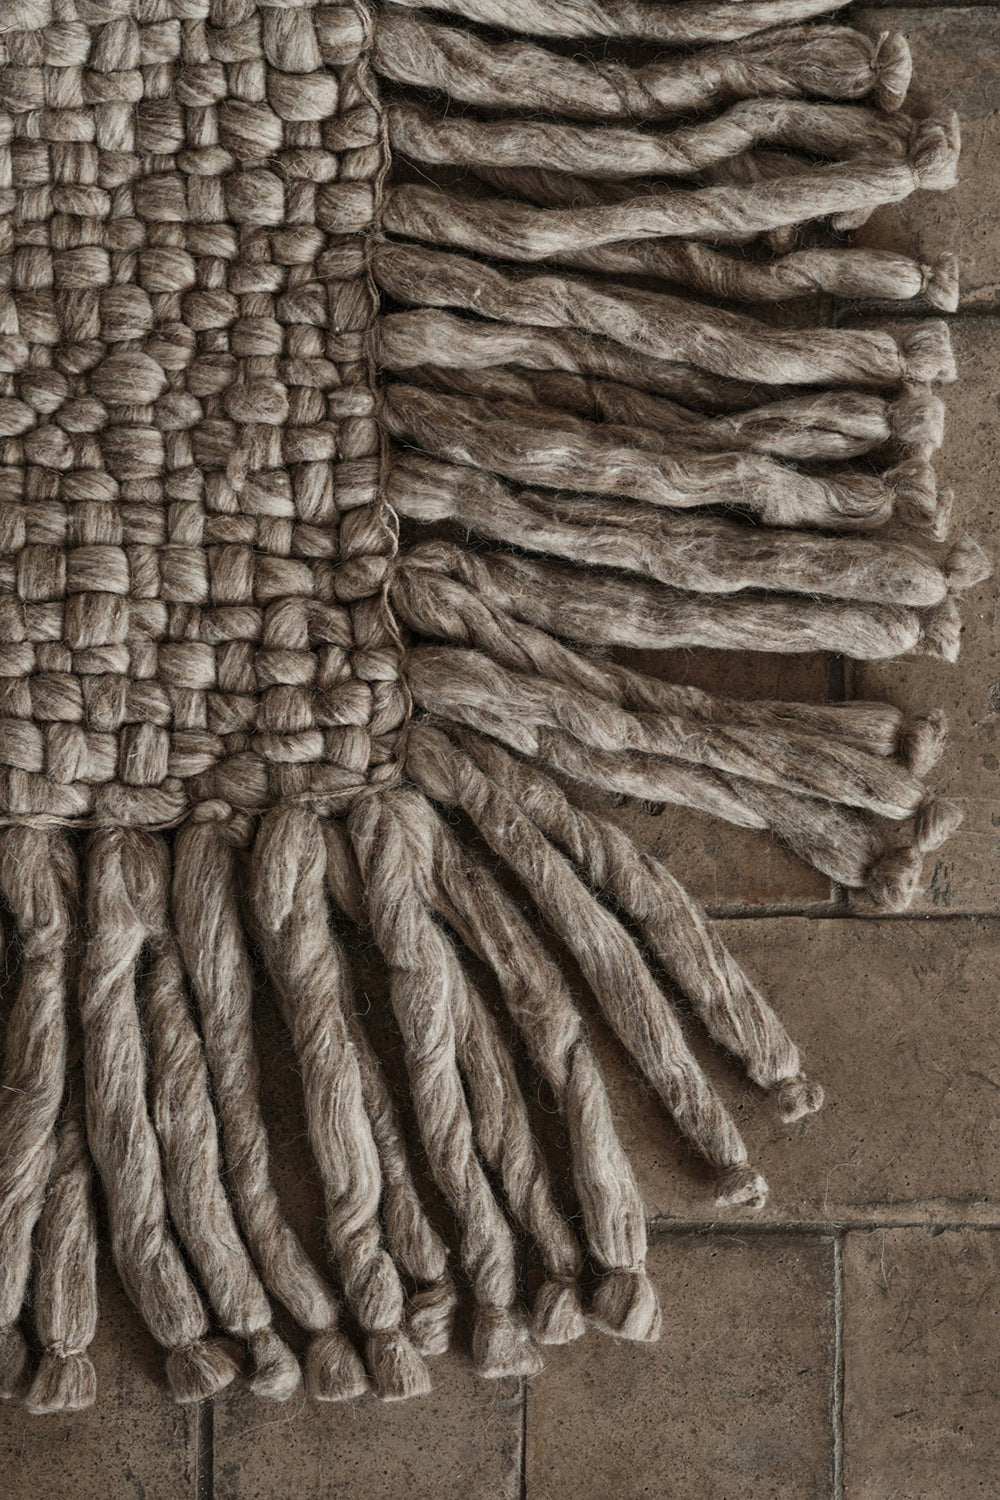 Details of beige handwoven rug with tassels